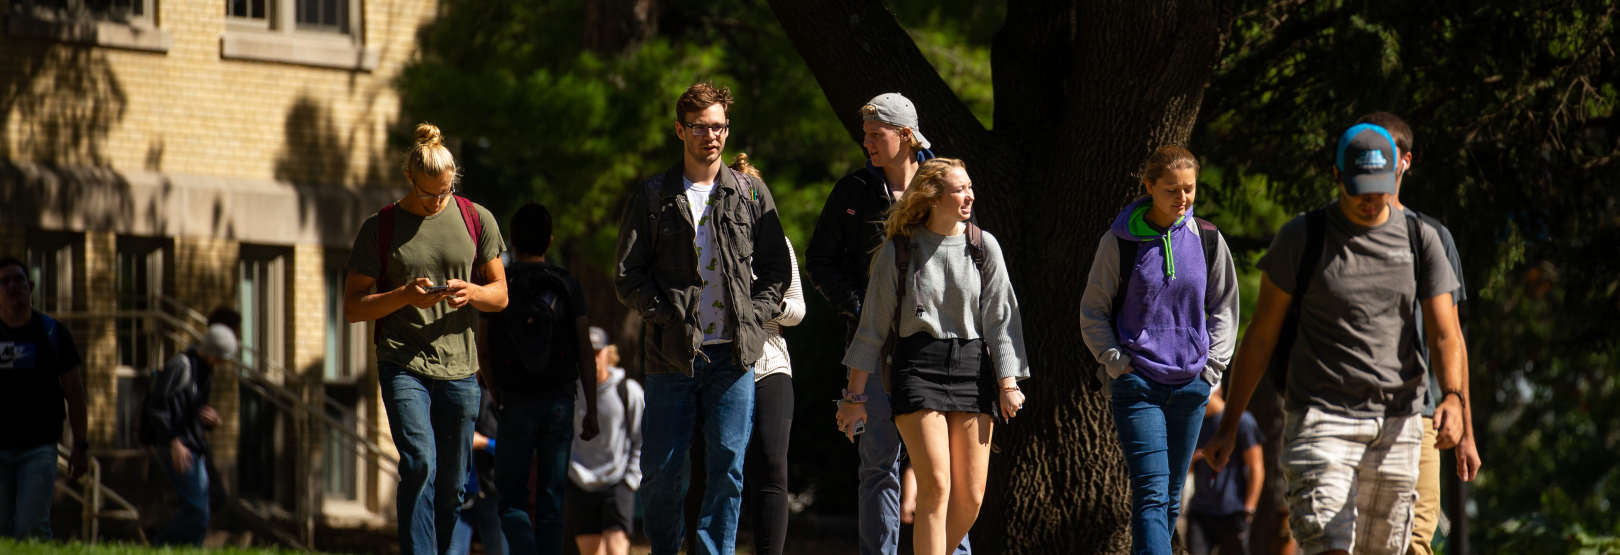 Spring campus students walking